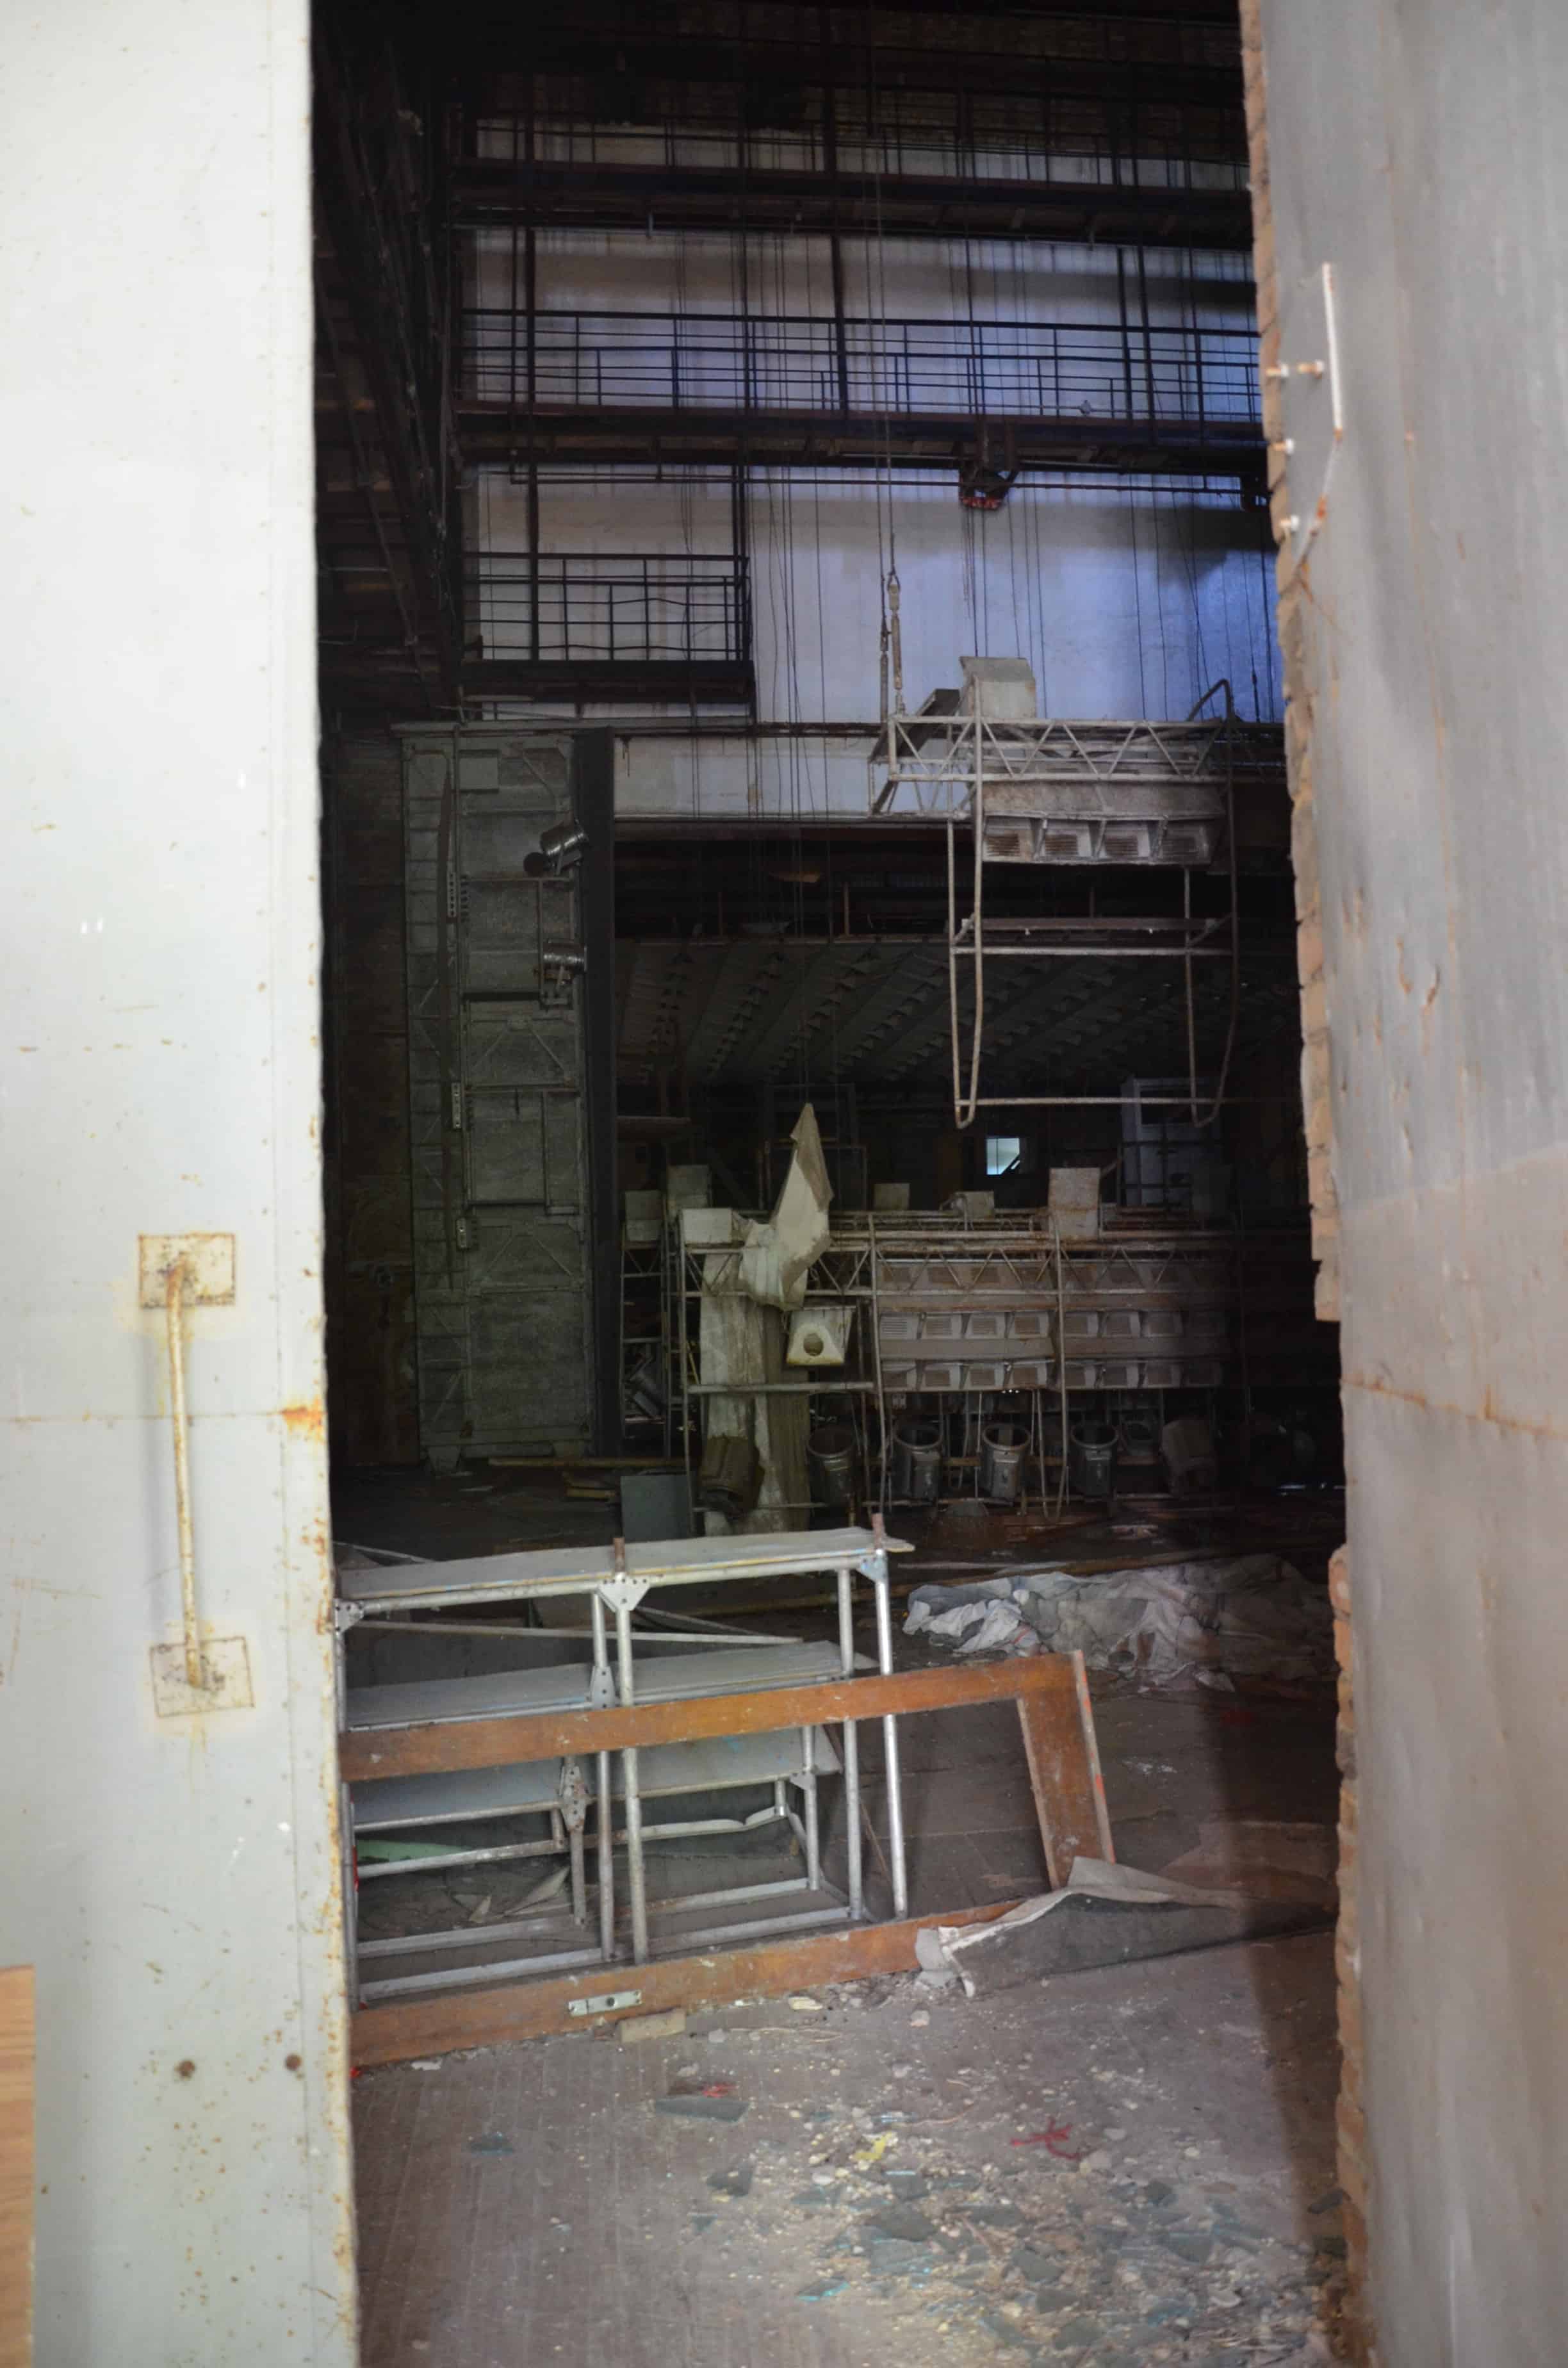 City storage room in Pripyat, Chernobyl Exclusion Zone, Ukraine